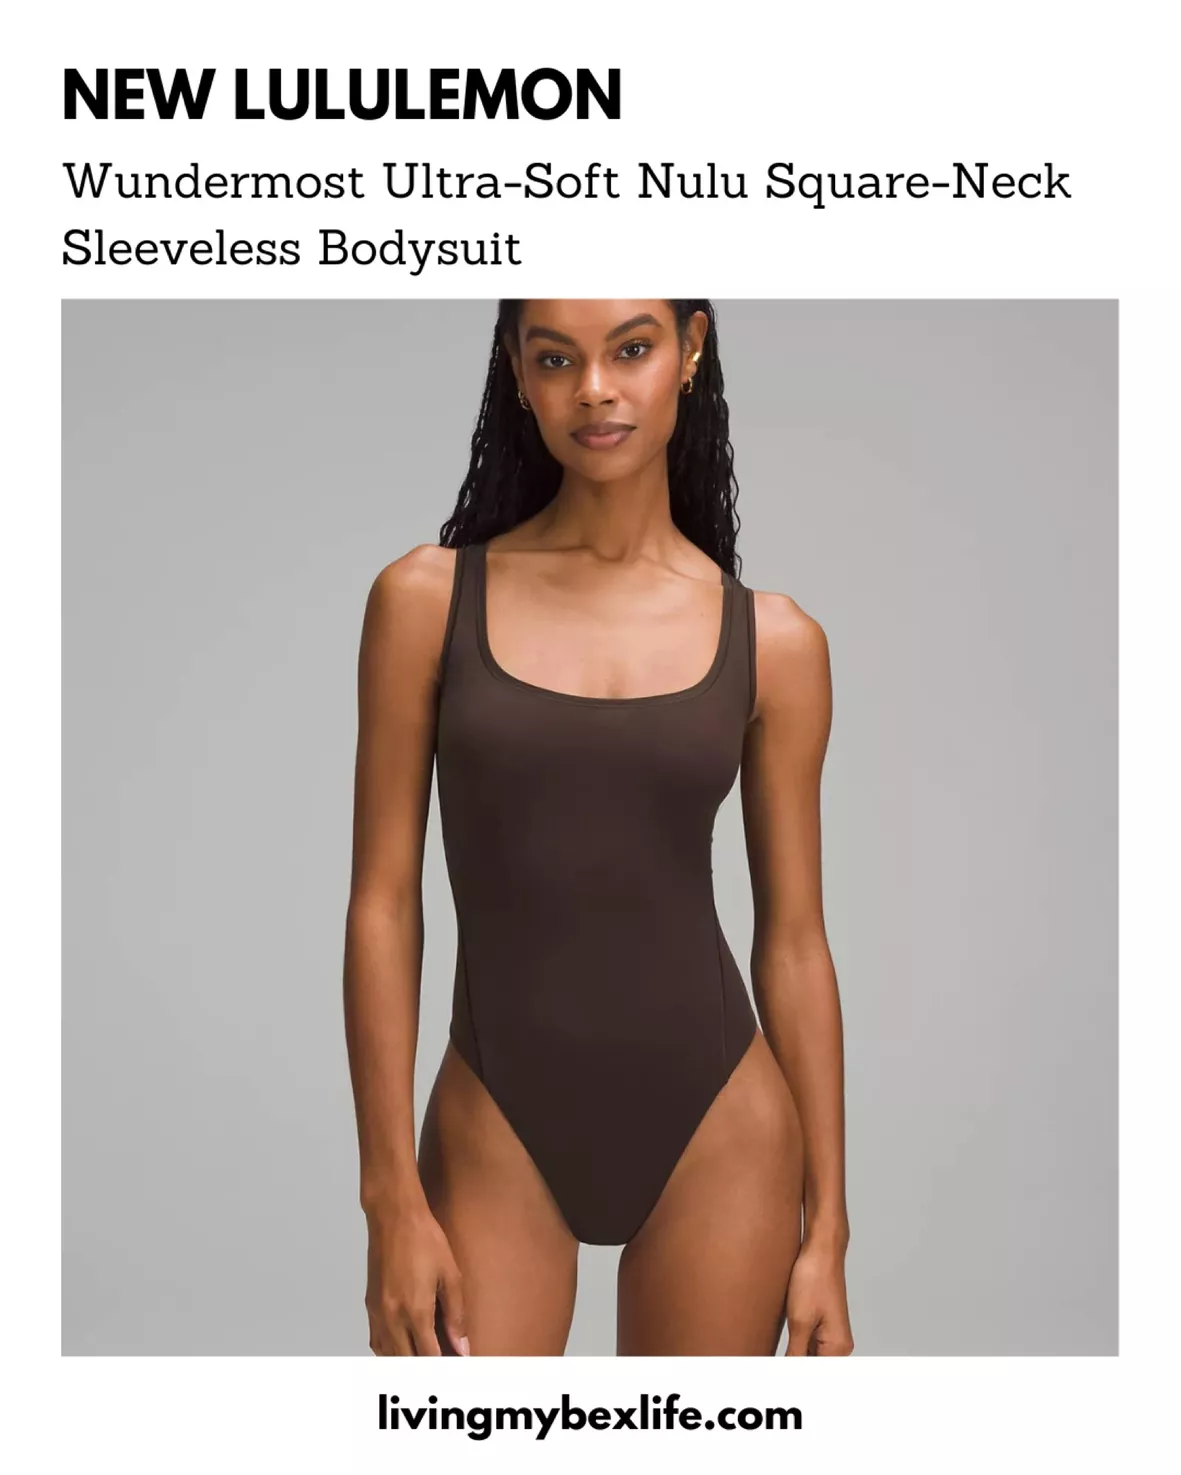 Wundermost Ultra-Soft Nulu High-Neck Sleeveless Bodysuit